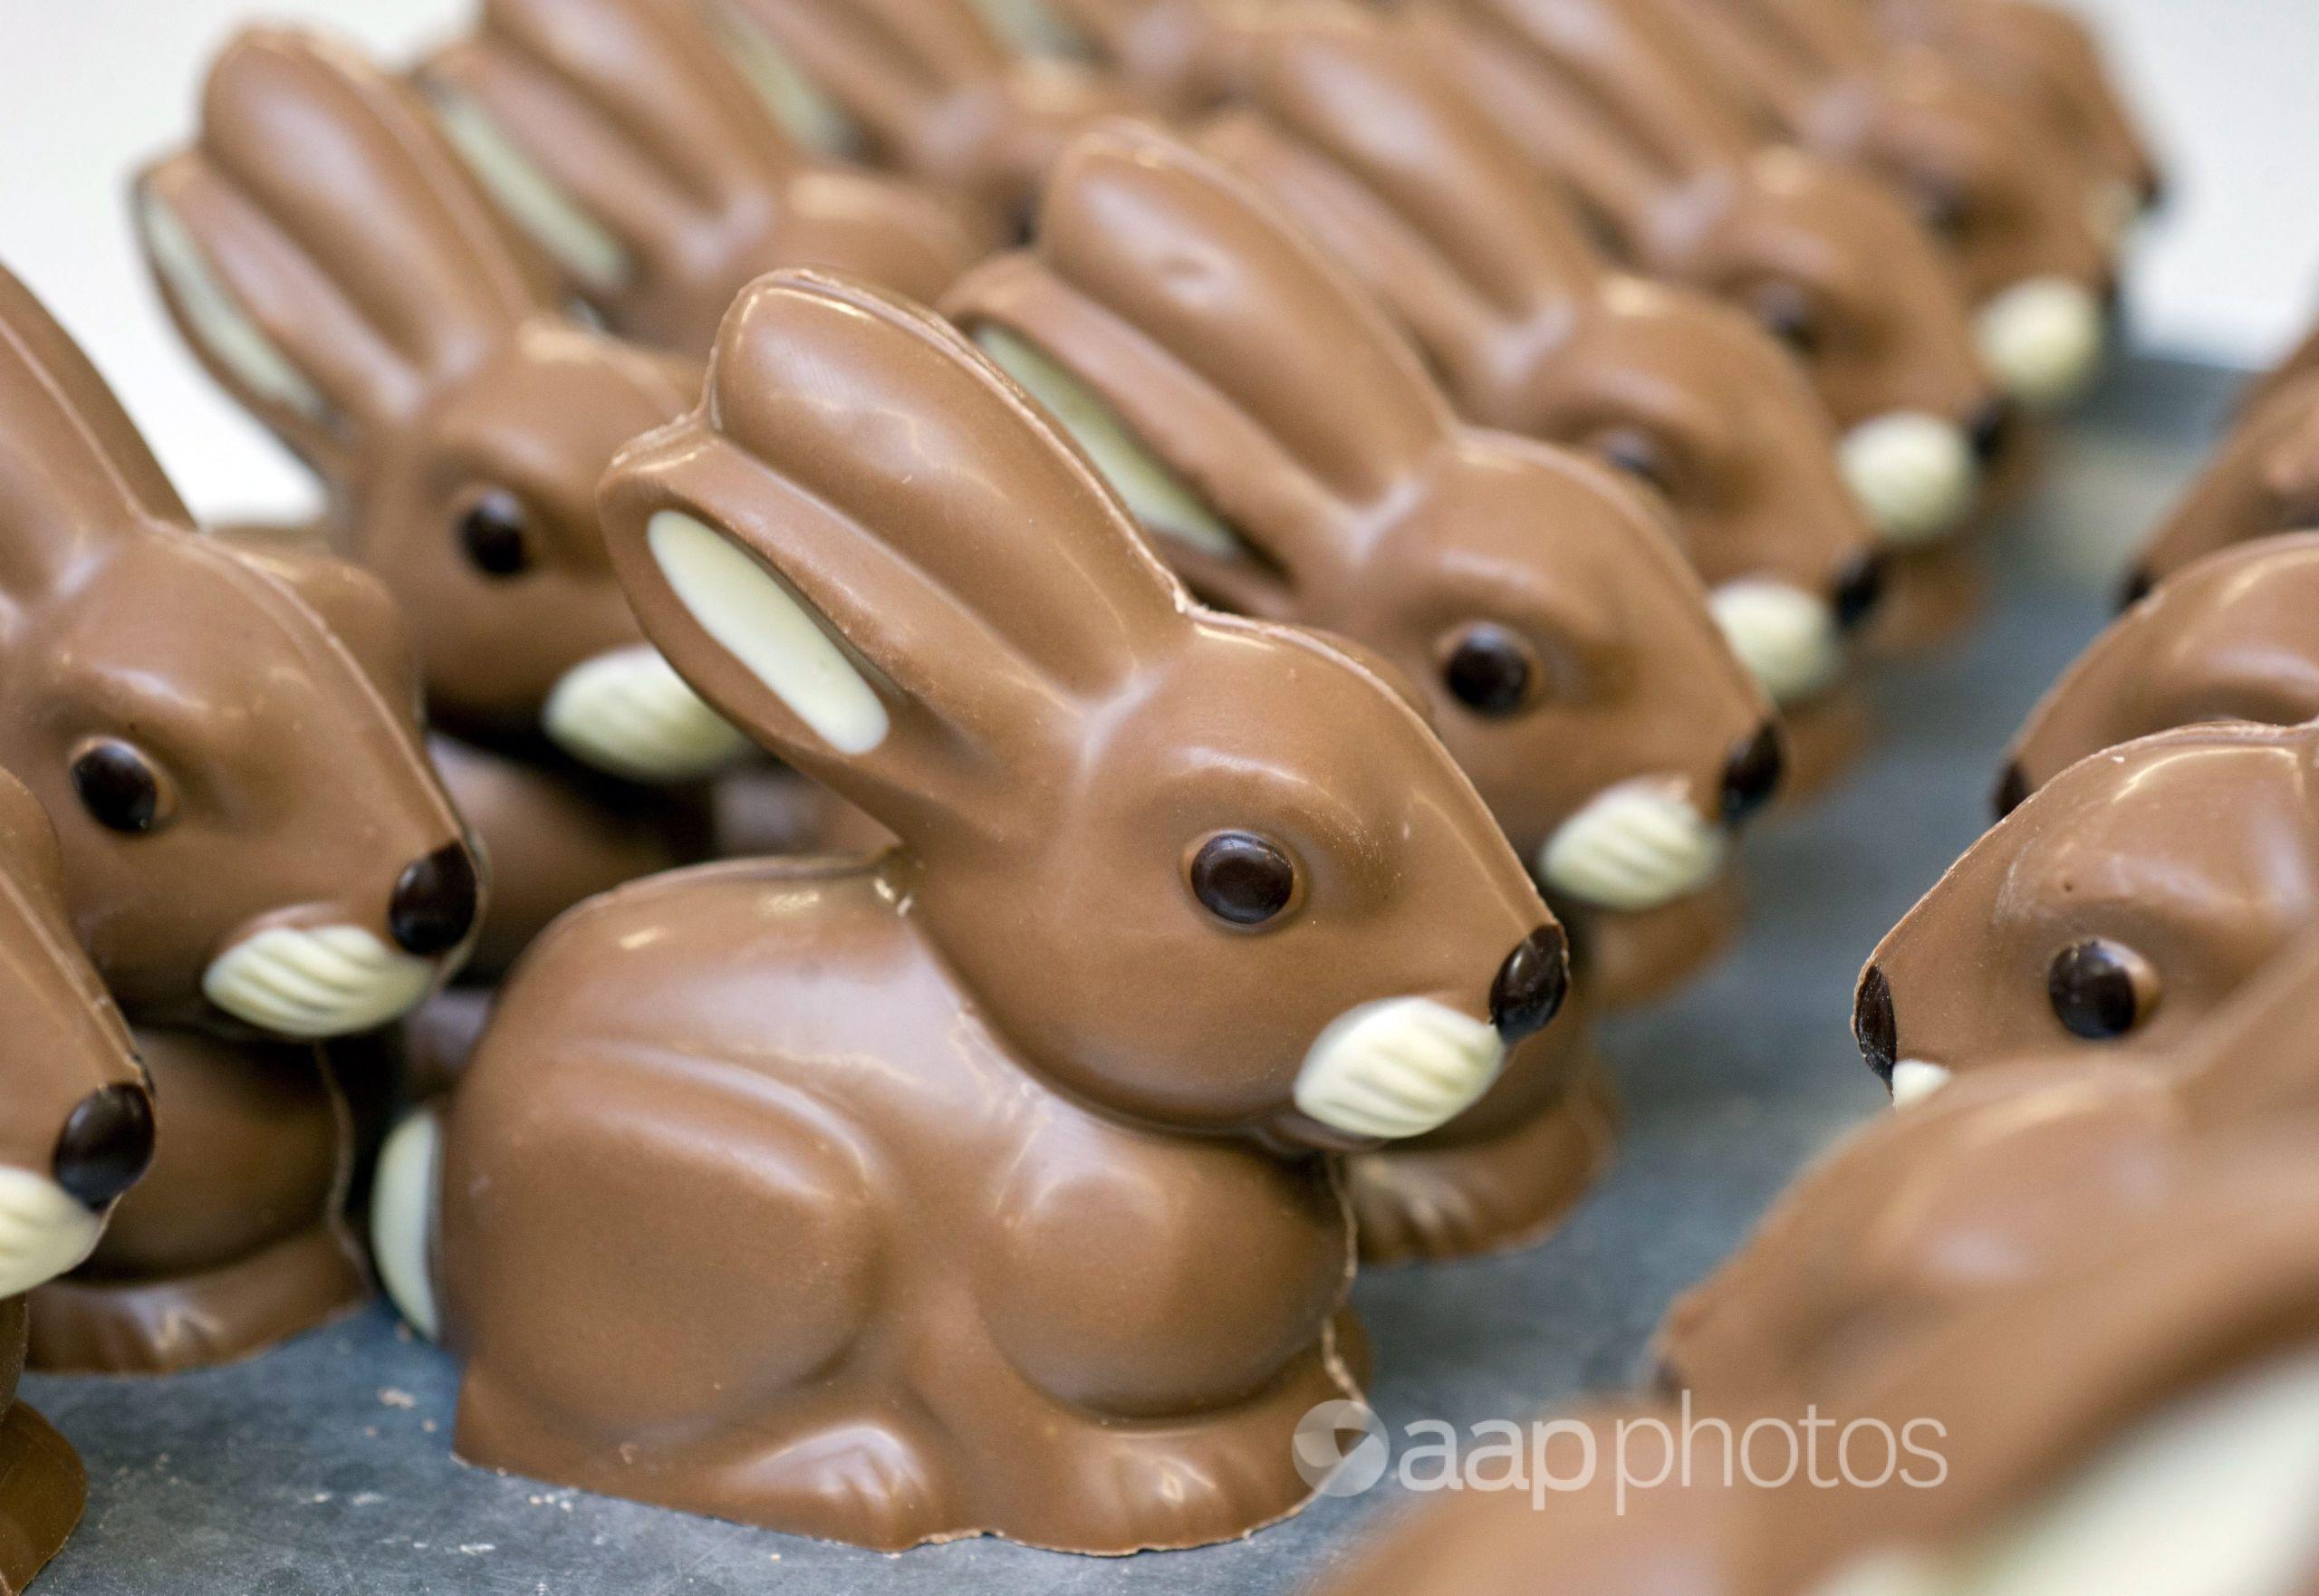 Chocolate Easter bunnies